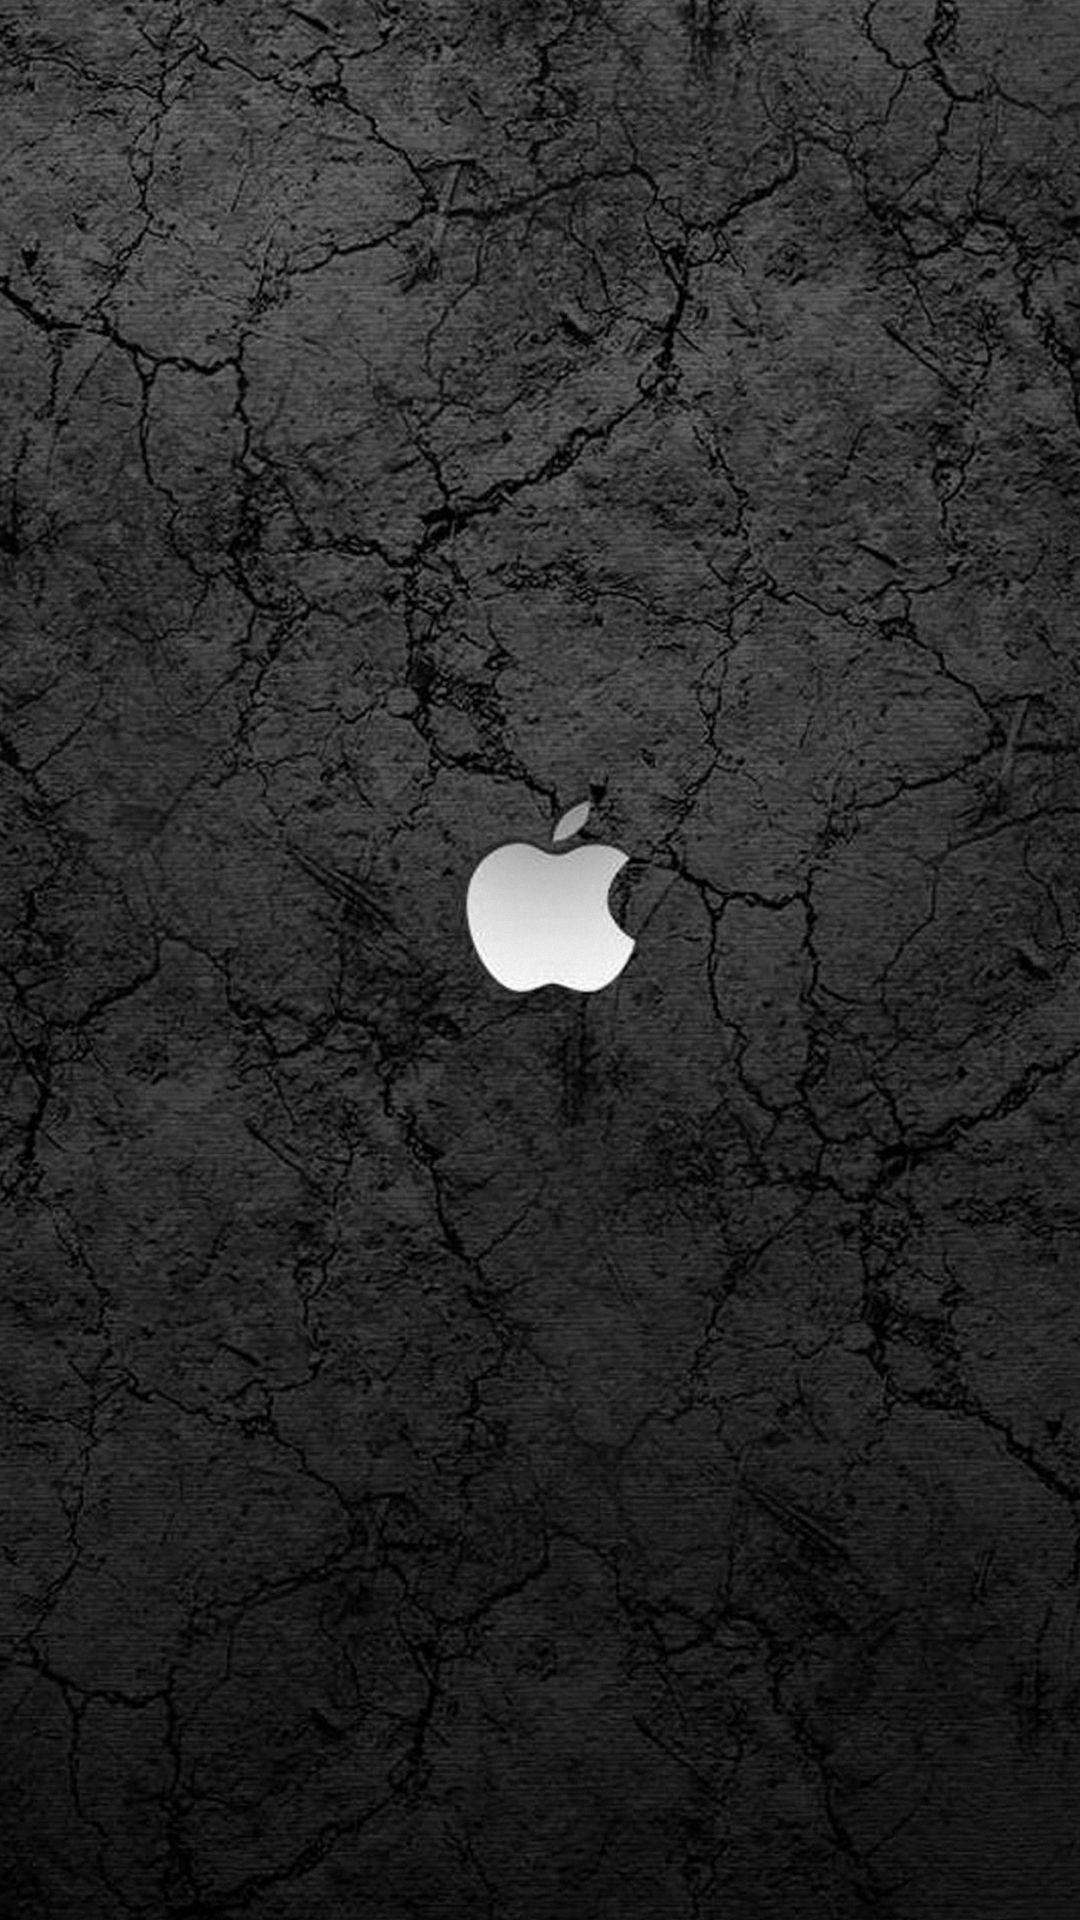 Apple iPhone 6 Plus Wallpaper Free Apple iPhone 6